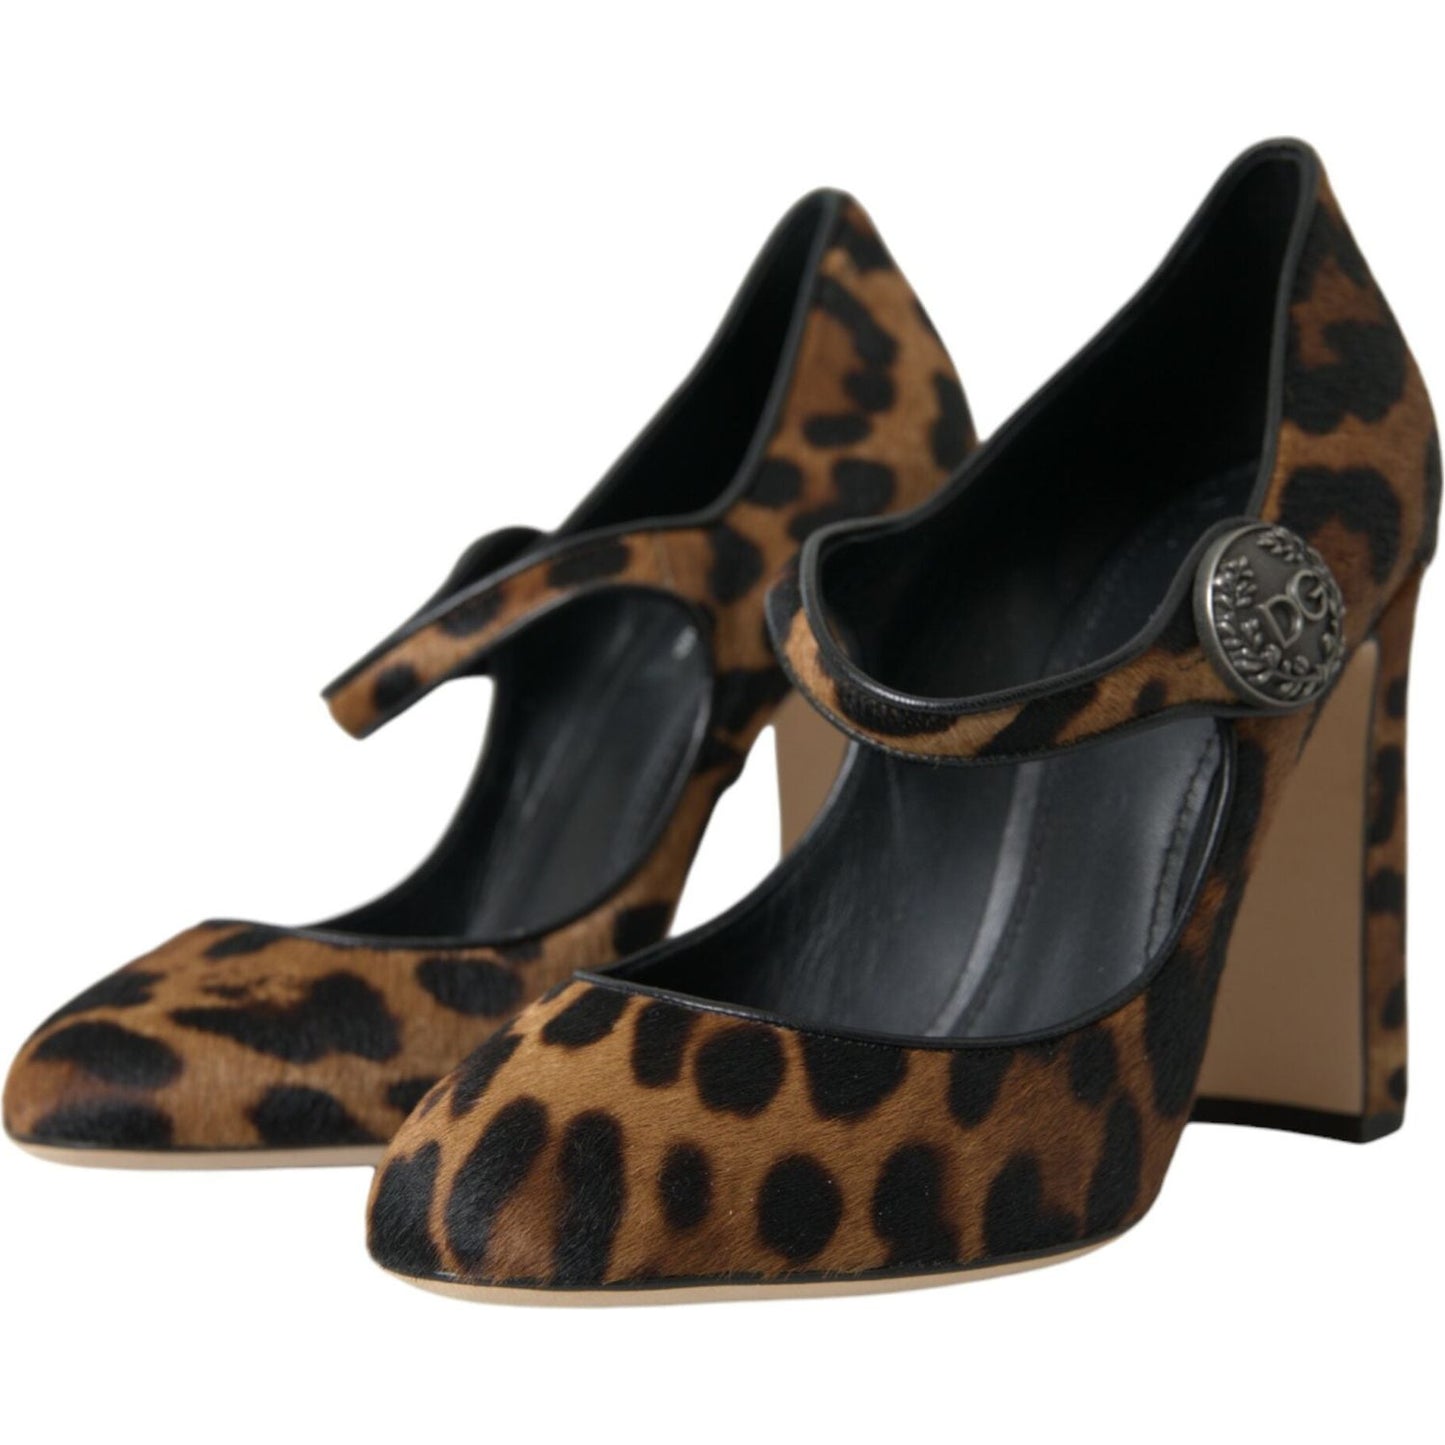 Dolce & Gabbana Brown Leopard Calf Hair Mary Jane Pumps Shoes brown-leopard-calf-hair-mary-jane-pumps-shoes